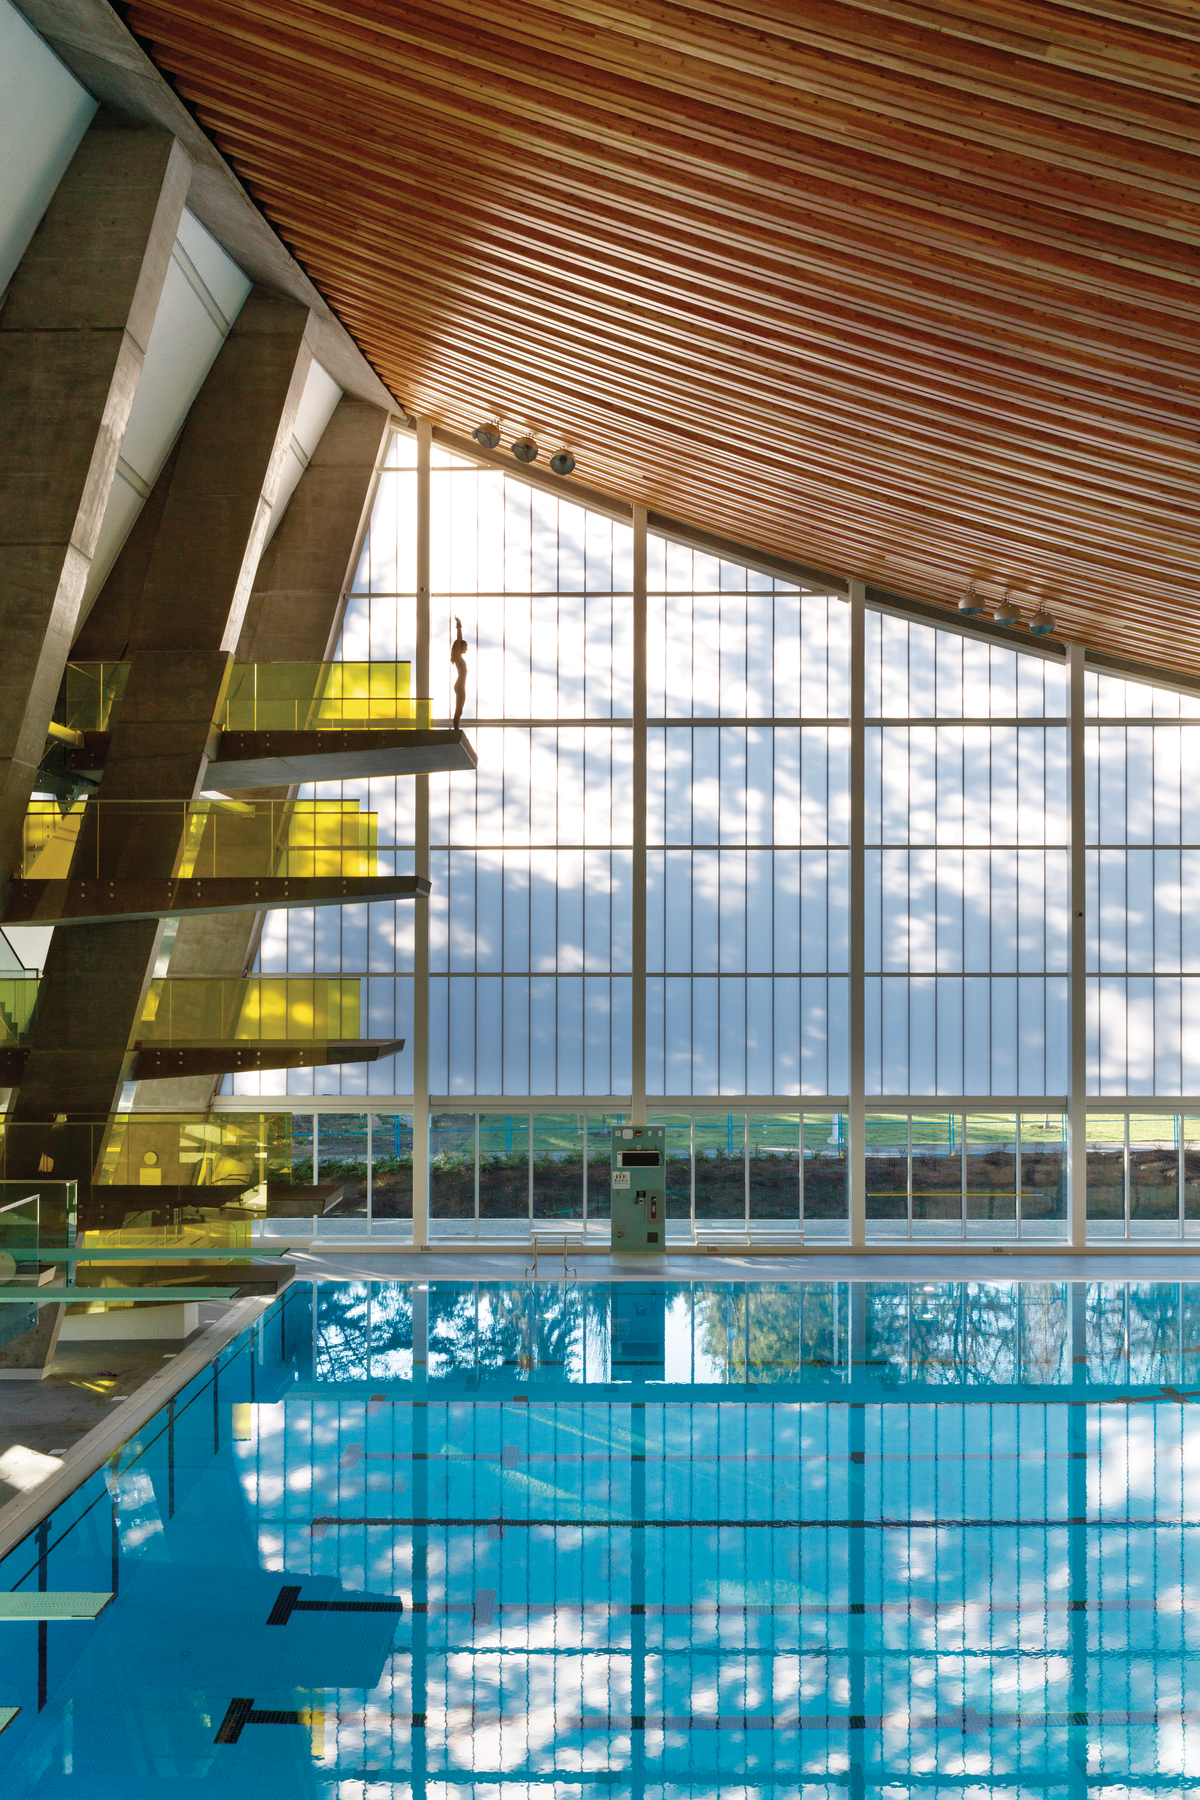 Grandview Heights水上运动中心的室内白天视图，展示了由混凝土柱支撑的弧形胶合木天花板，背景是整面玻璃墙，前景是潜水员在10米高的平台上